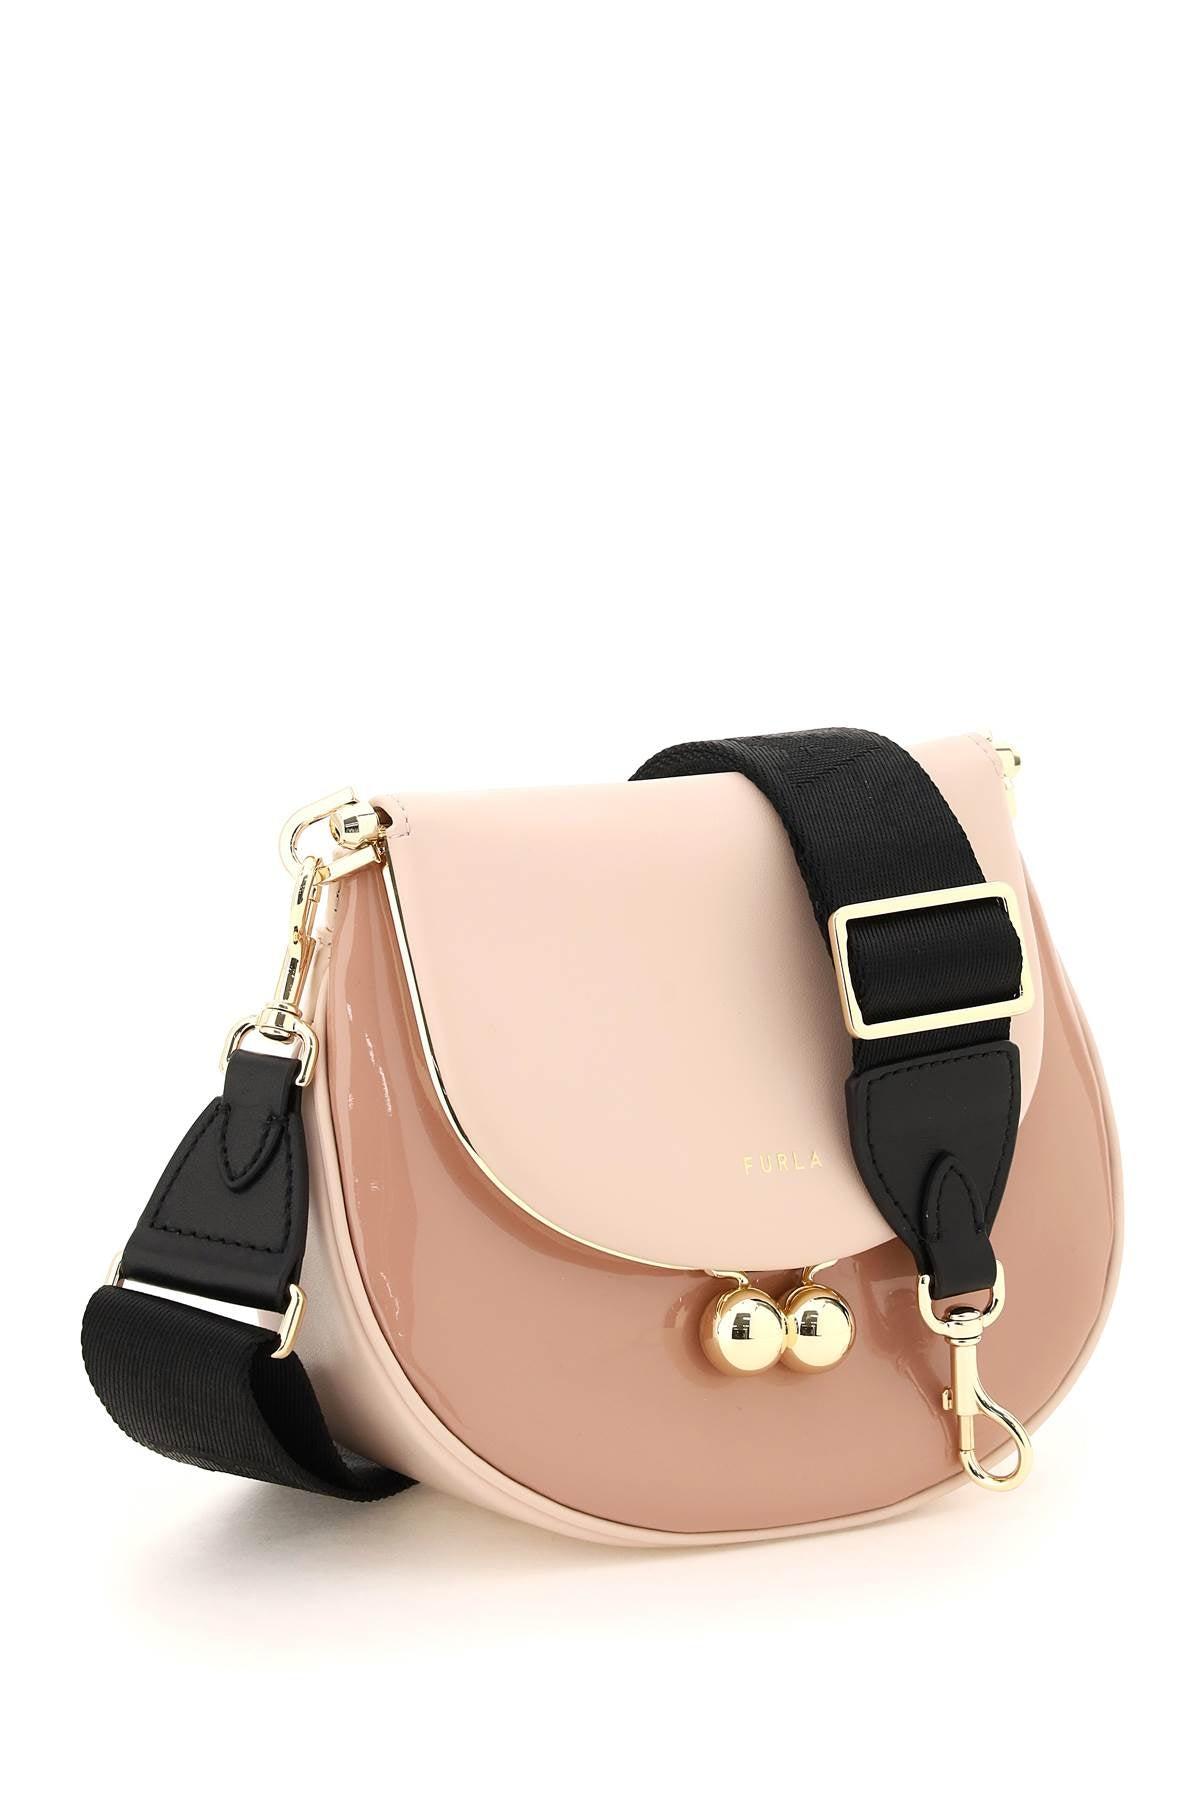 Details about   Women's Leather Crossbody Phone Bag Purse Small Shoulder Strap Bags Handbag 